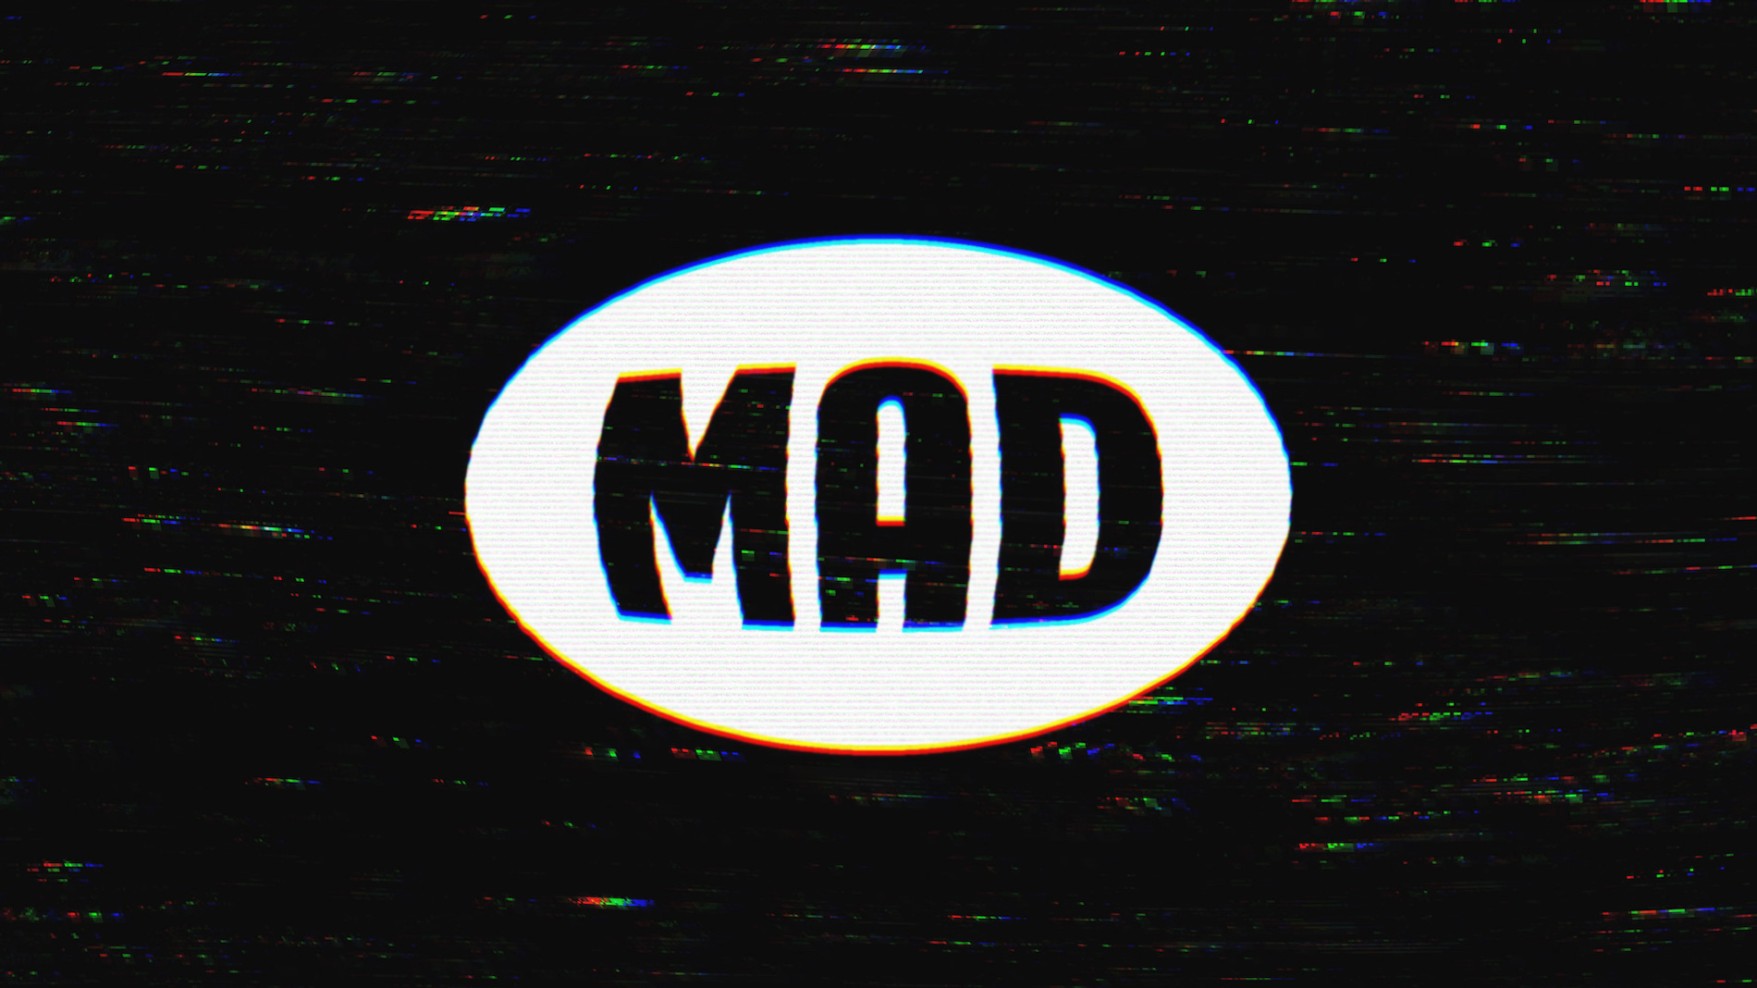  mad-image-2-AQ7A4